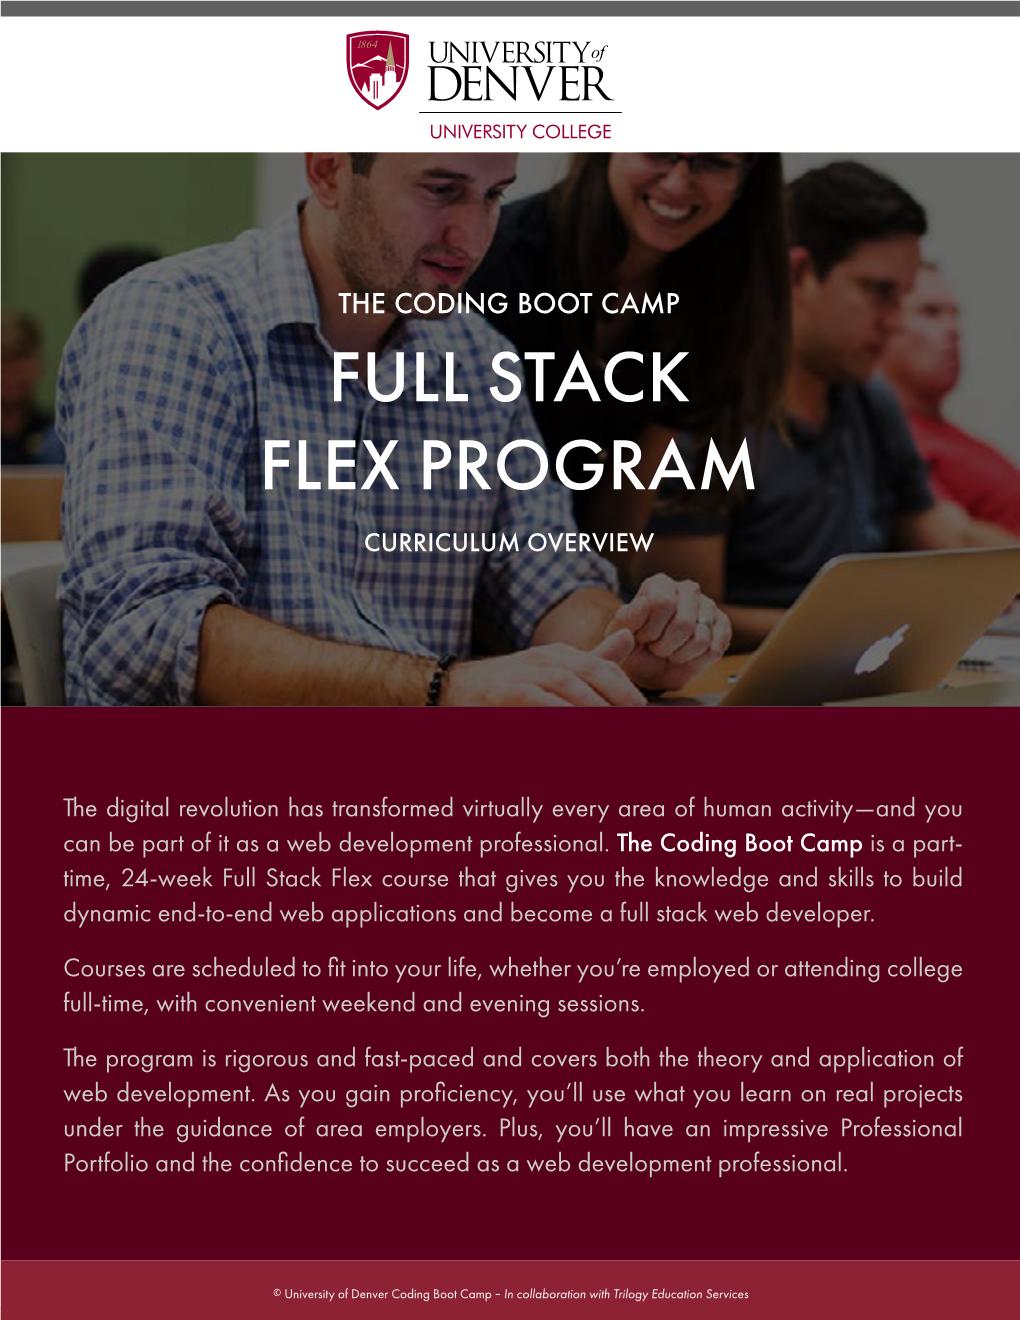 Full Stack Flex Program Curriculum Overview